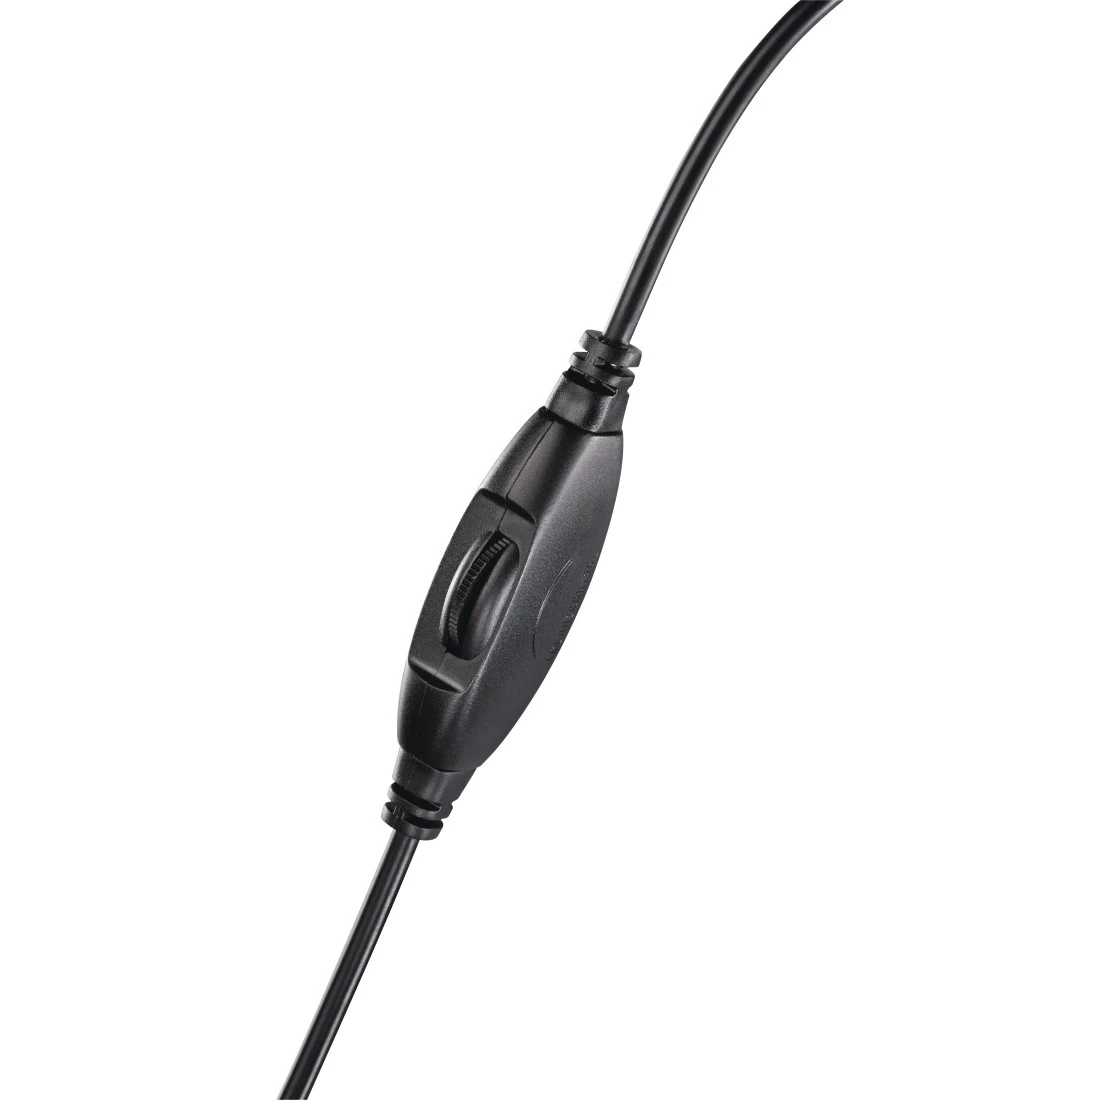 Hama 00184144 ShellTV TV Headphones, Over-Ear, One-Sided, Long Cable (6 m), black